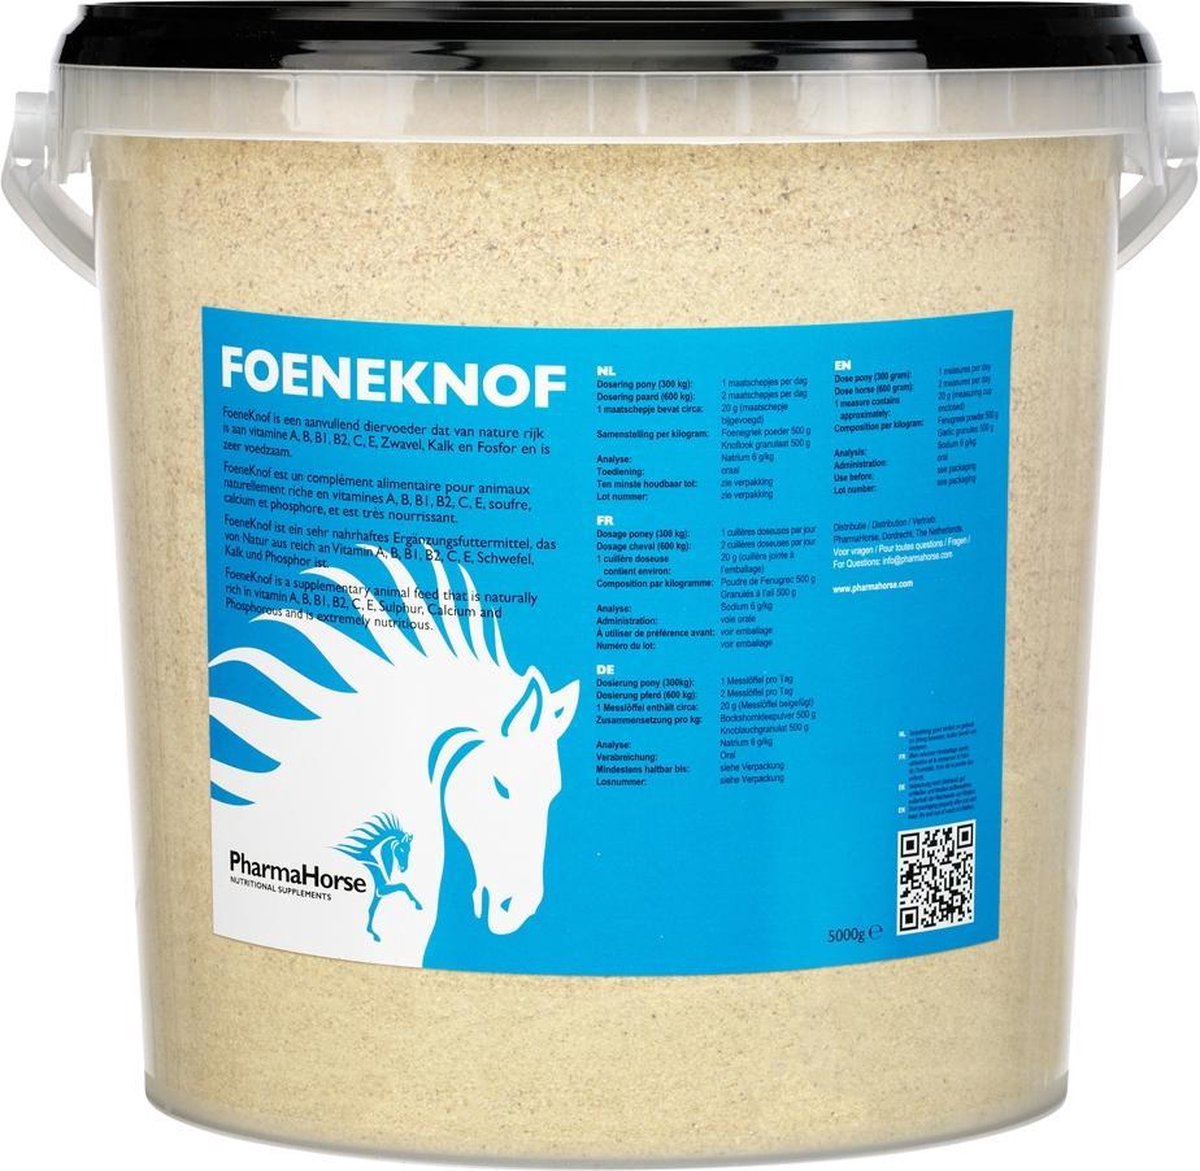 PharmaHorse Foeneknof - 5000 gram